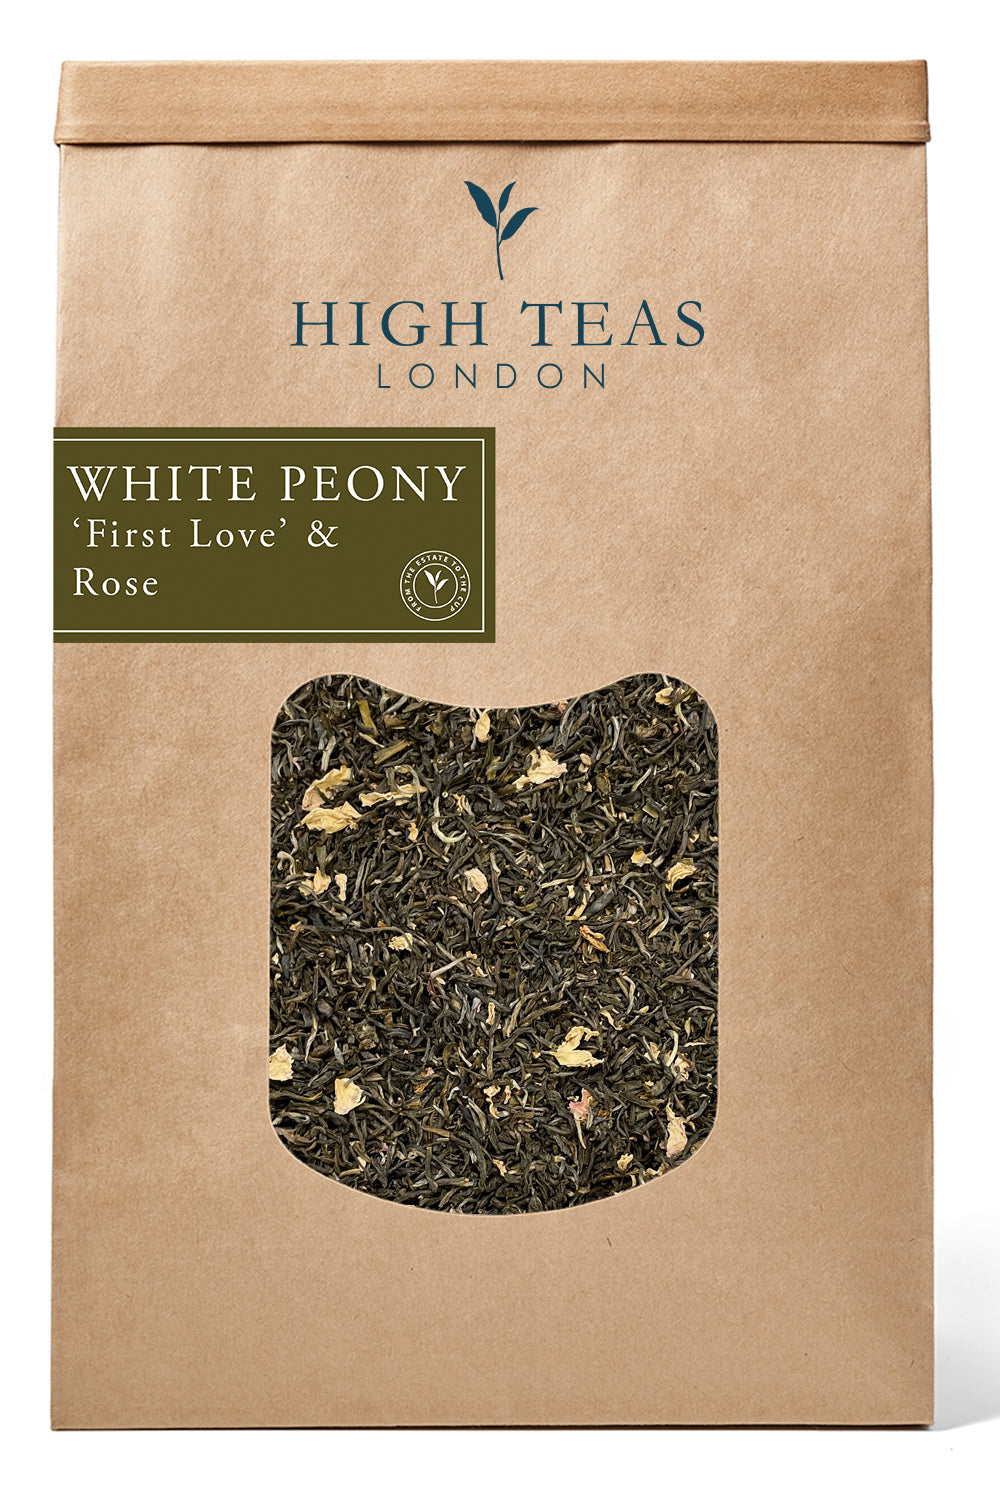 White Peony with Rose Petals aka First Love-500g-Loose Leaf Tea-High Teas